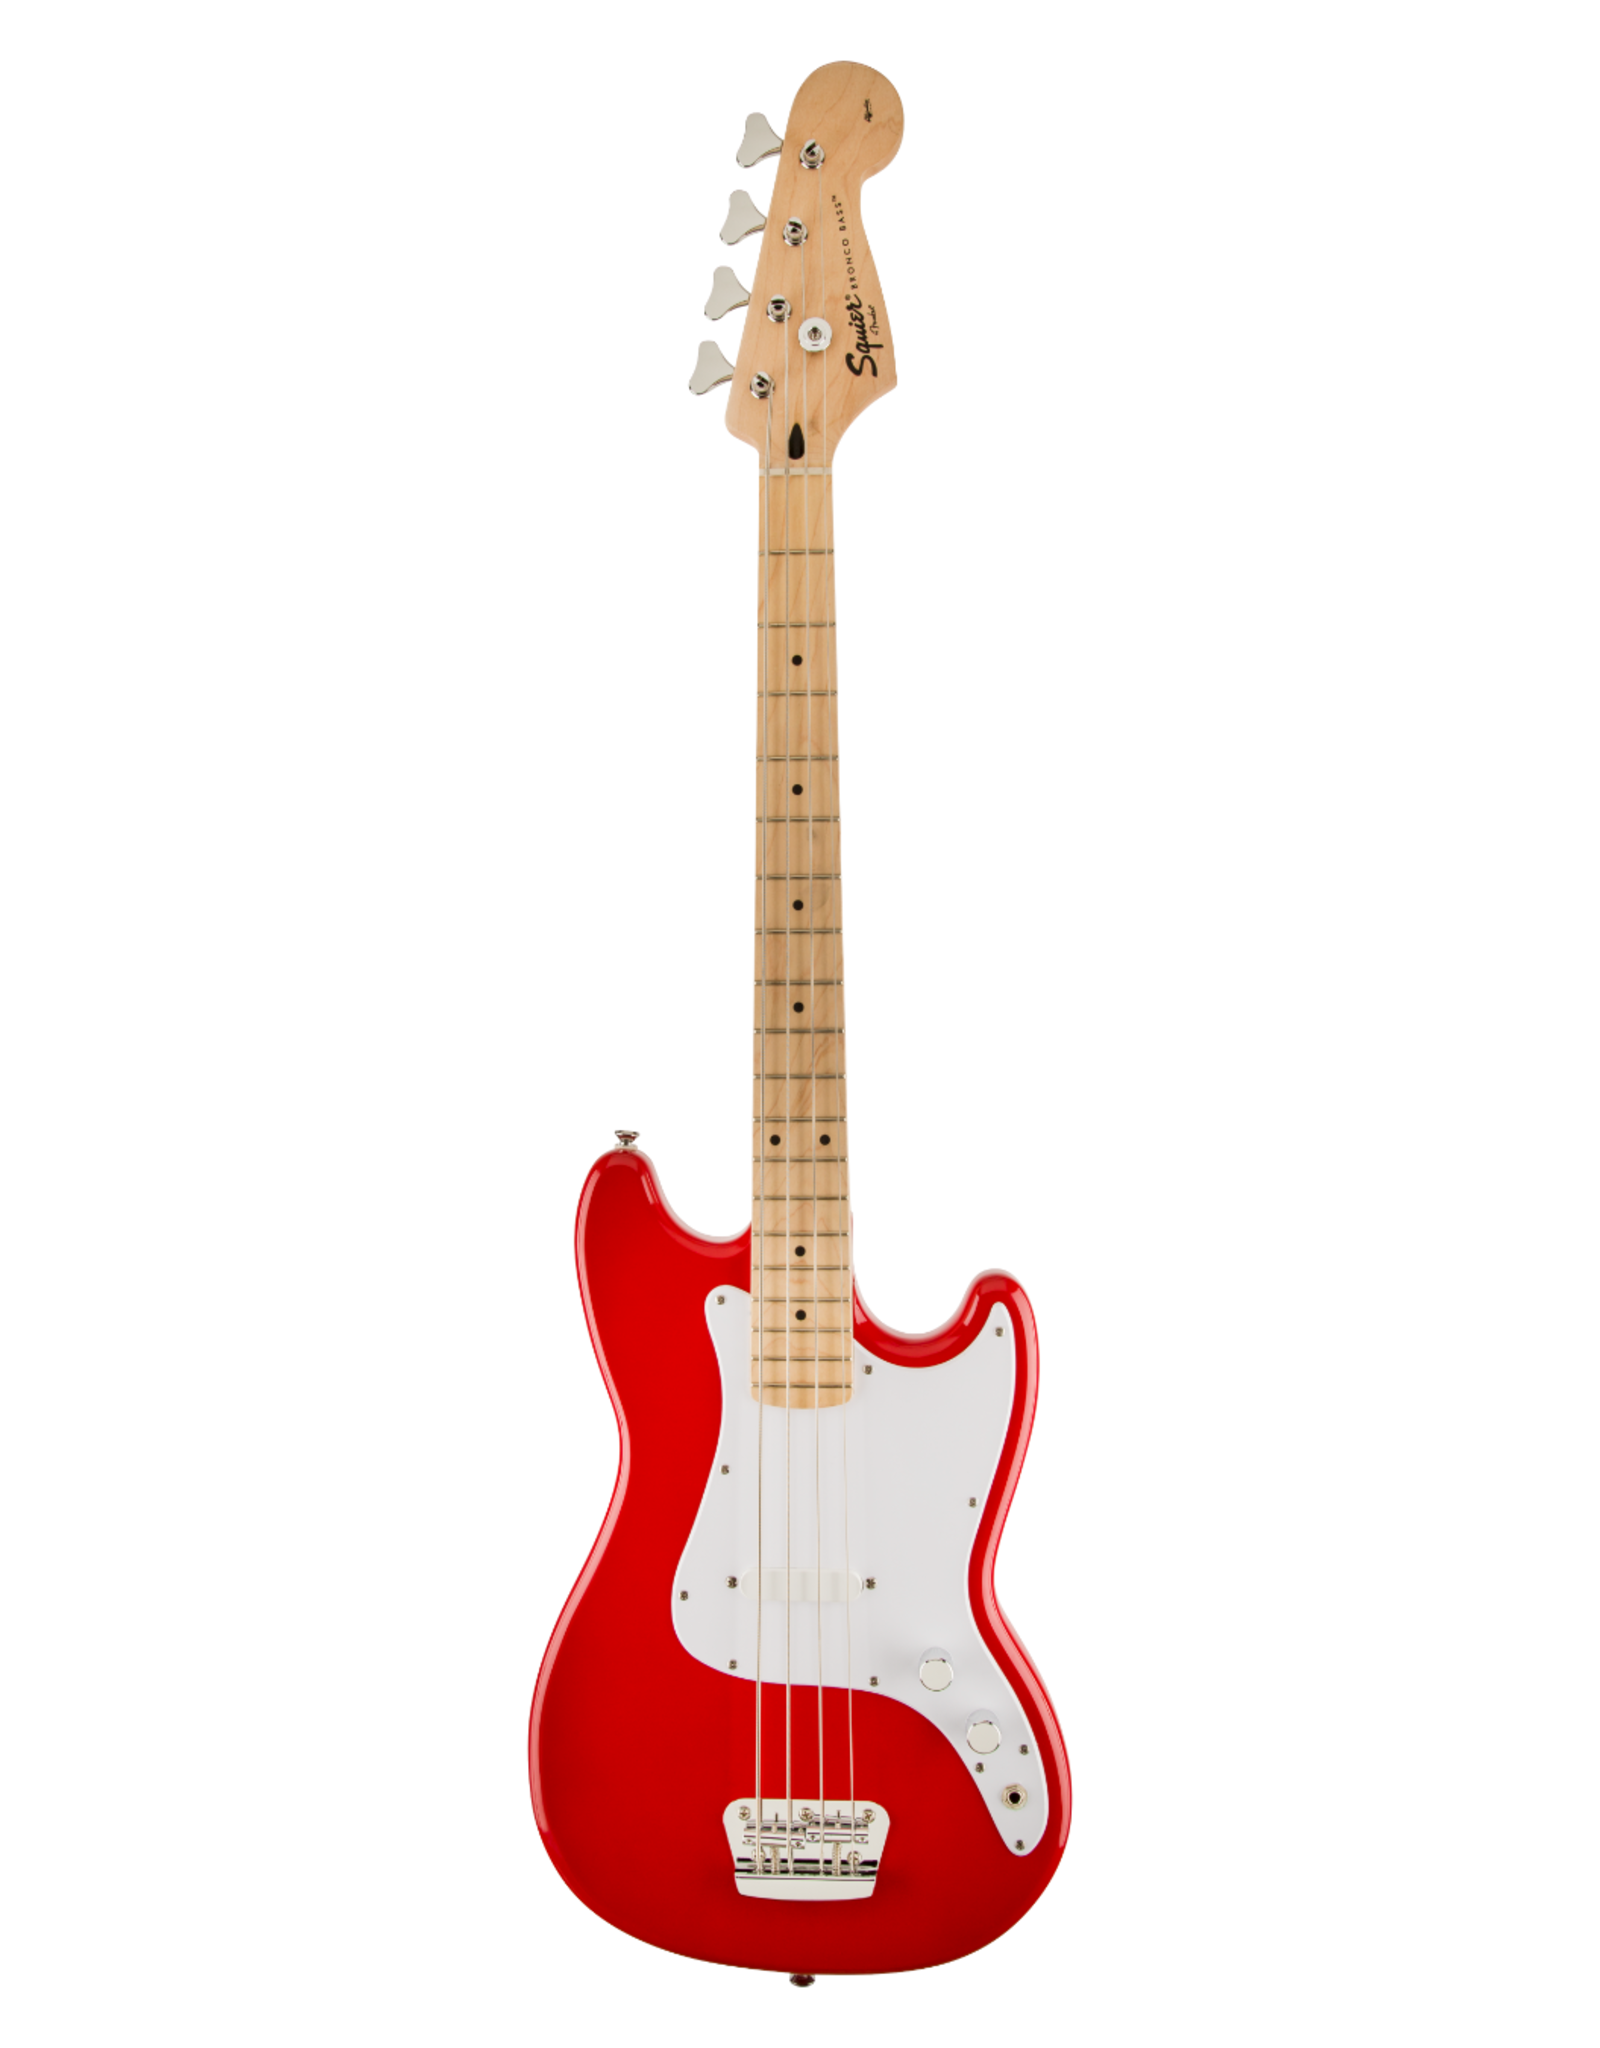 Squier Squier Bronco Bass - Maple Fretboard, Torino Red (0310902558)